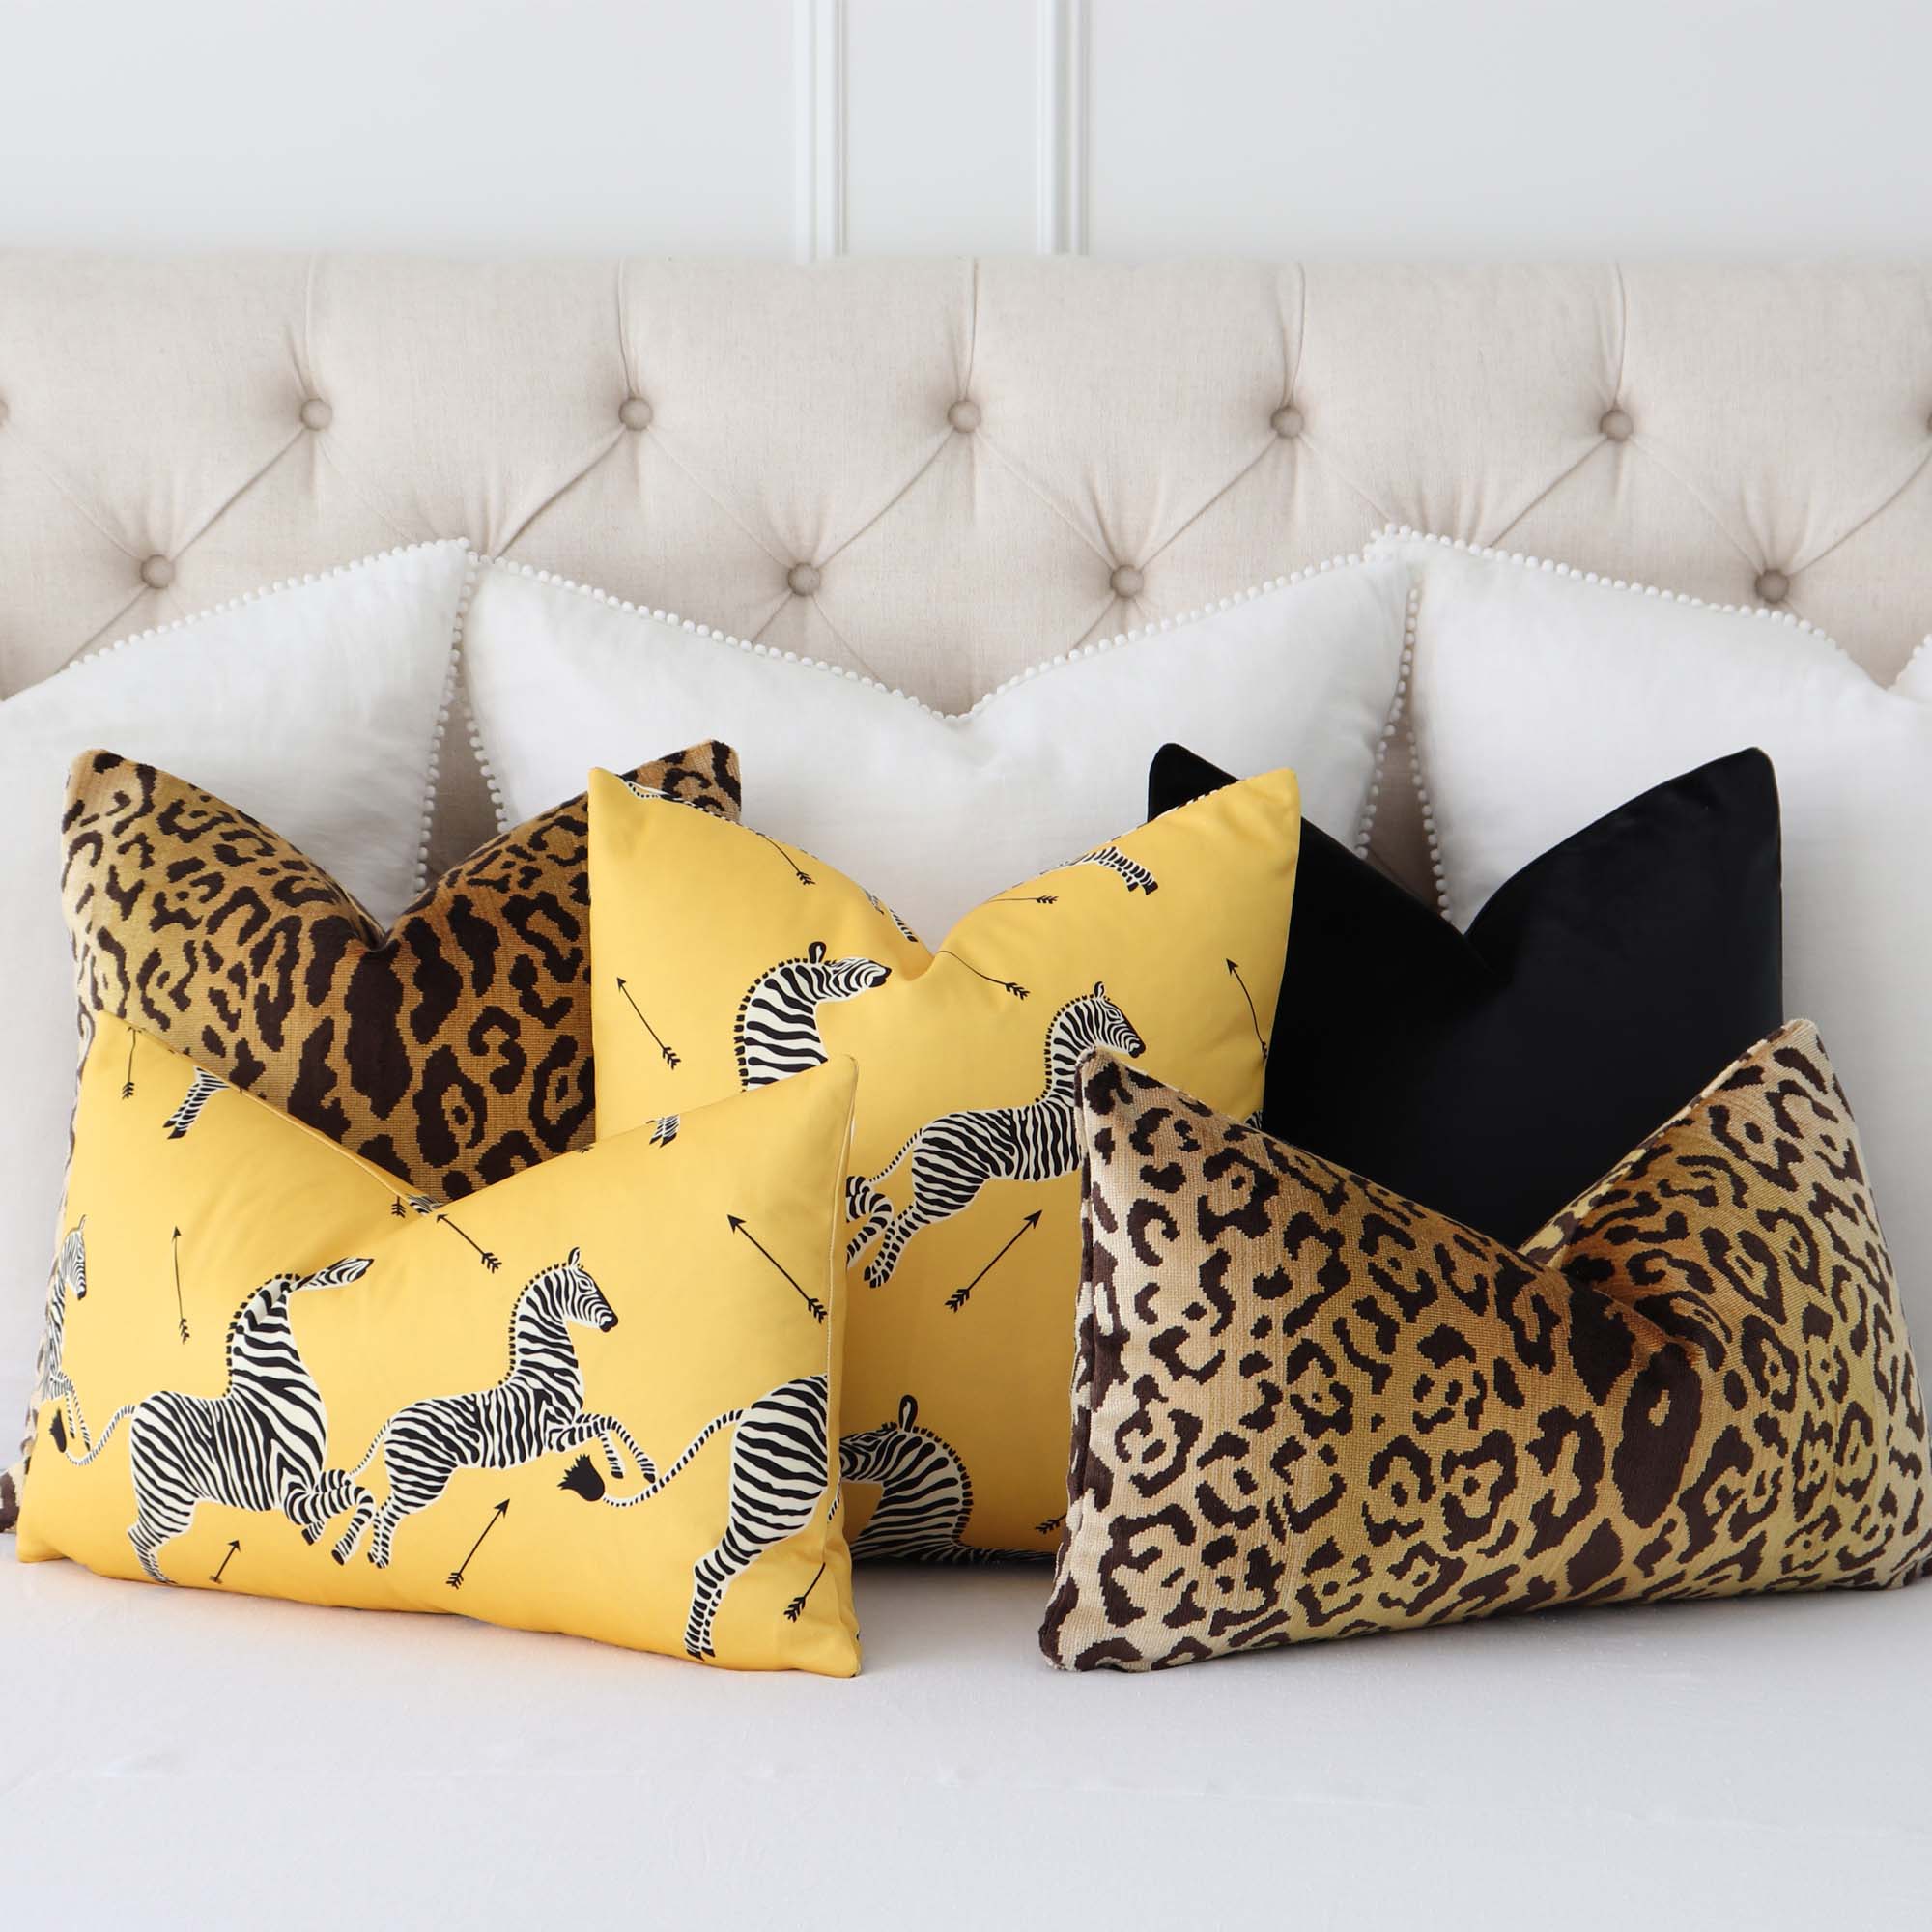 Scalamandre Zebras Petite Yellow Designer Animal Print Throw Pillow Cover